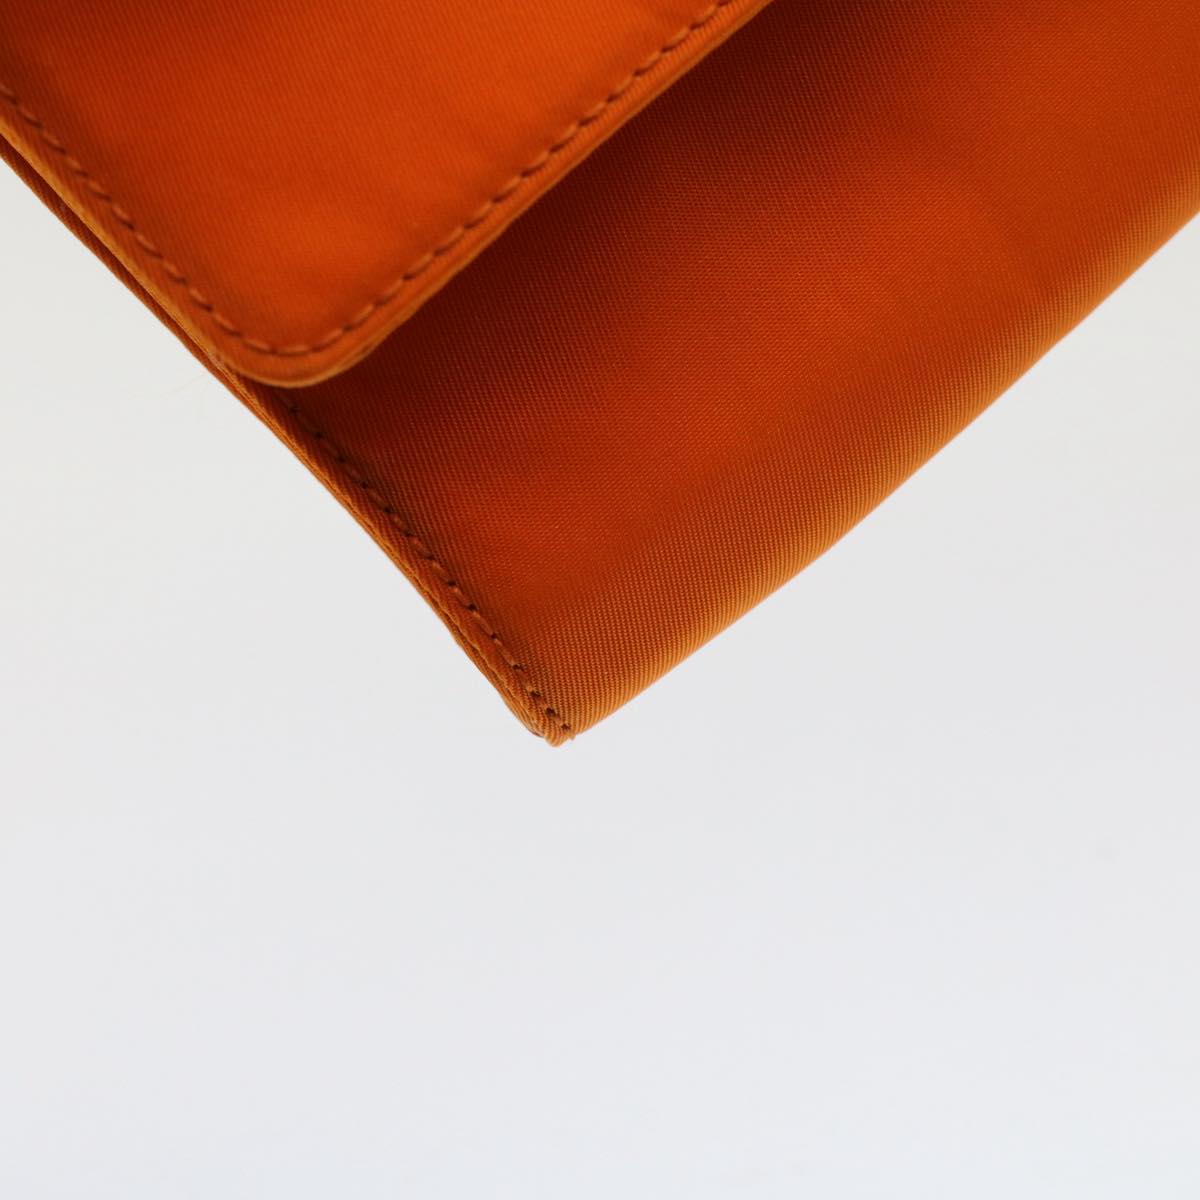 PRADA Wallet Shoulder Bag Nylon Orange Auth 51336